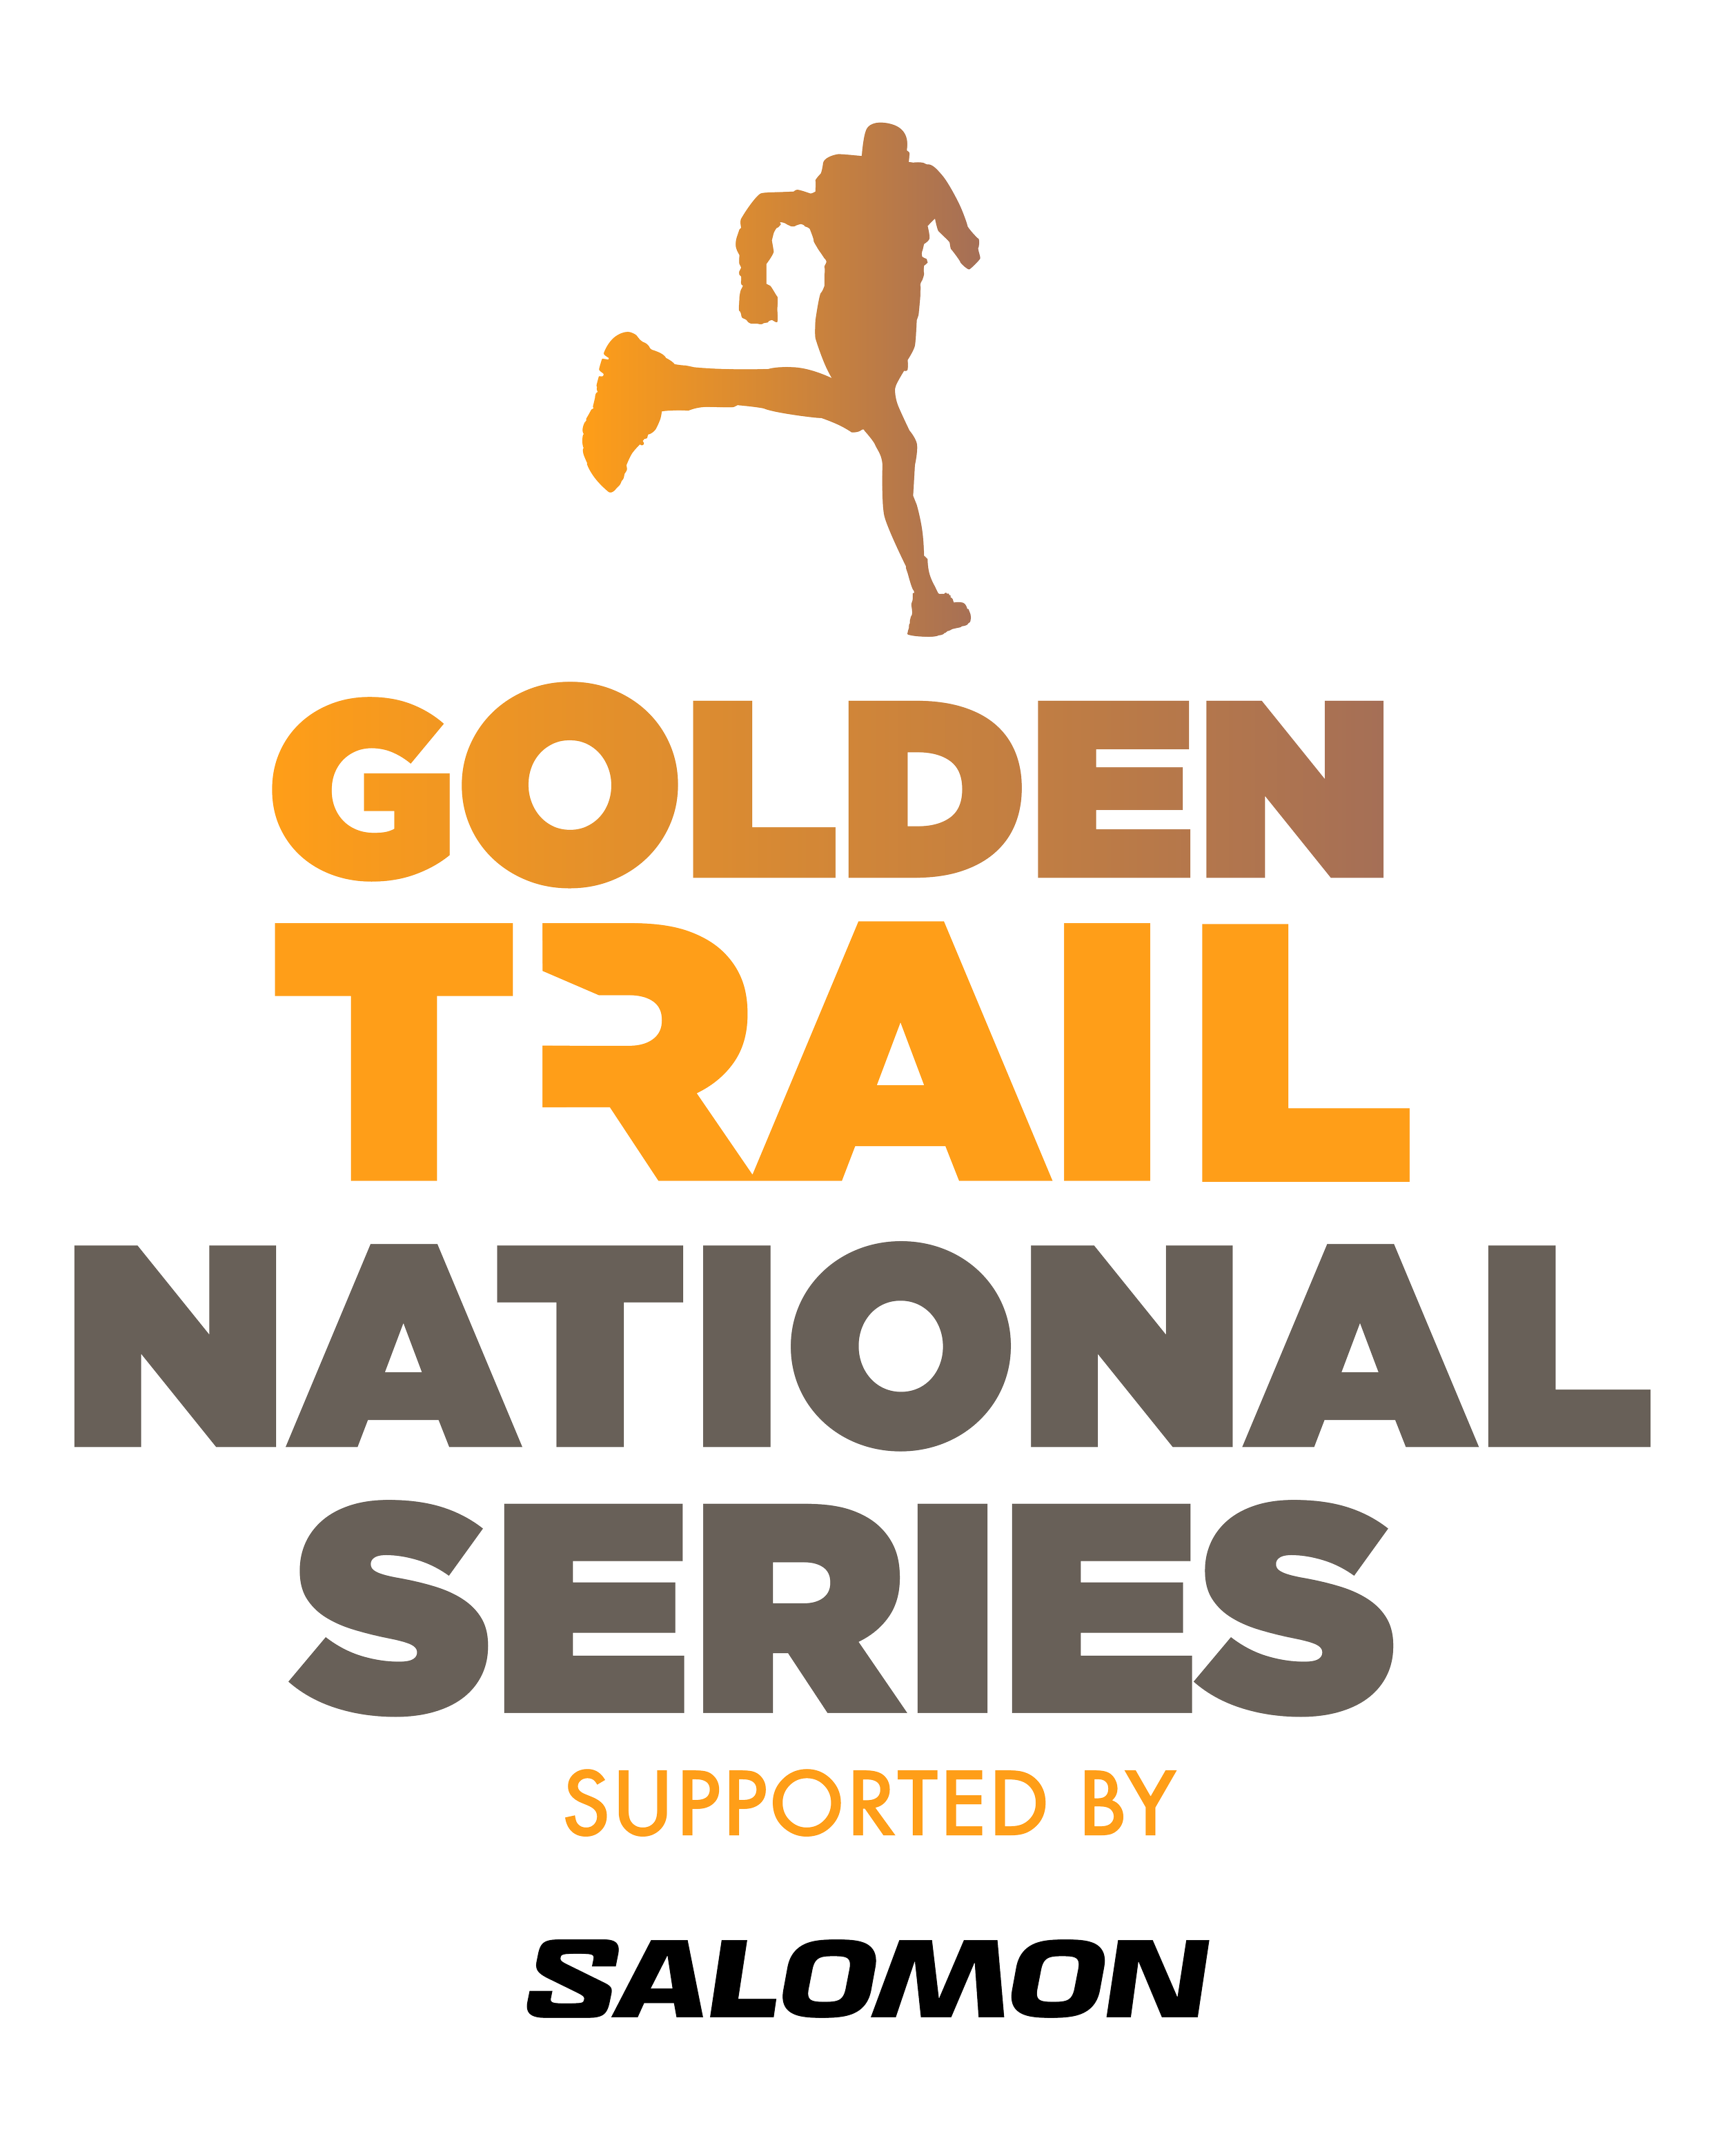 Golden Trail National Series